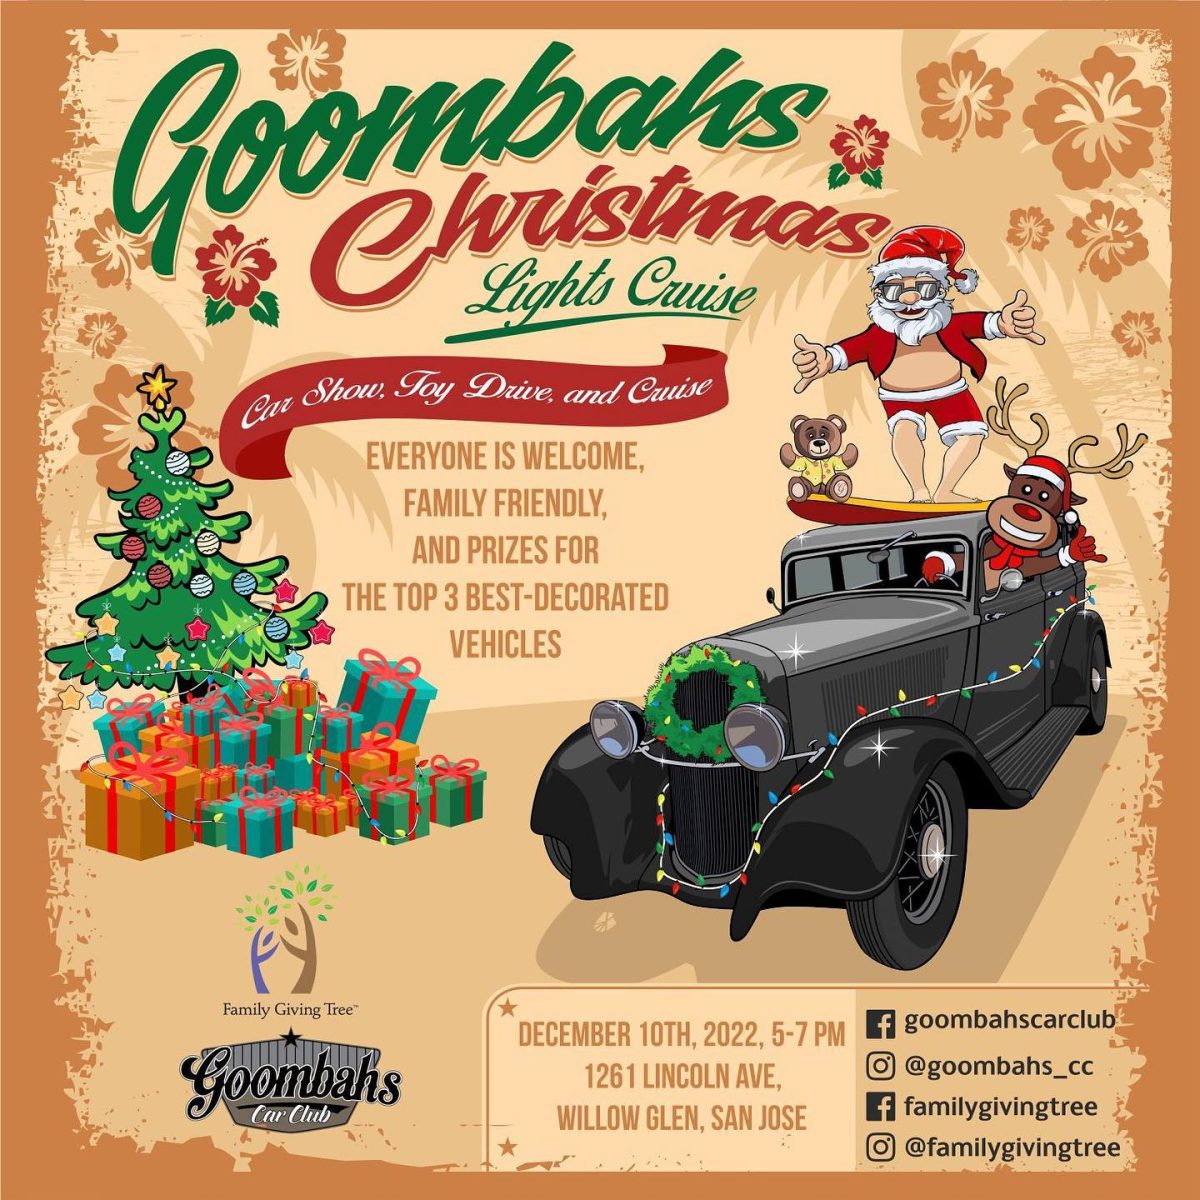 Goombahs Christmas Lights Cruise